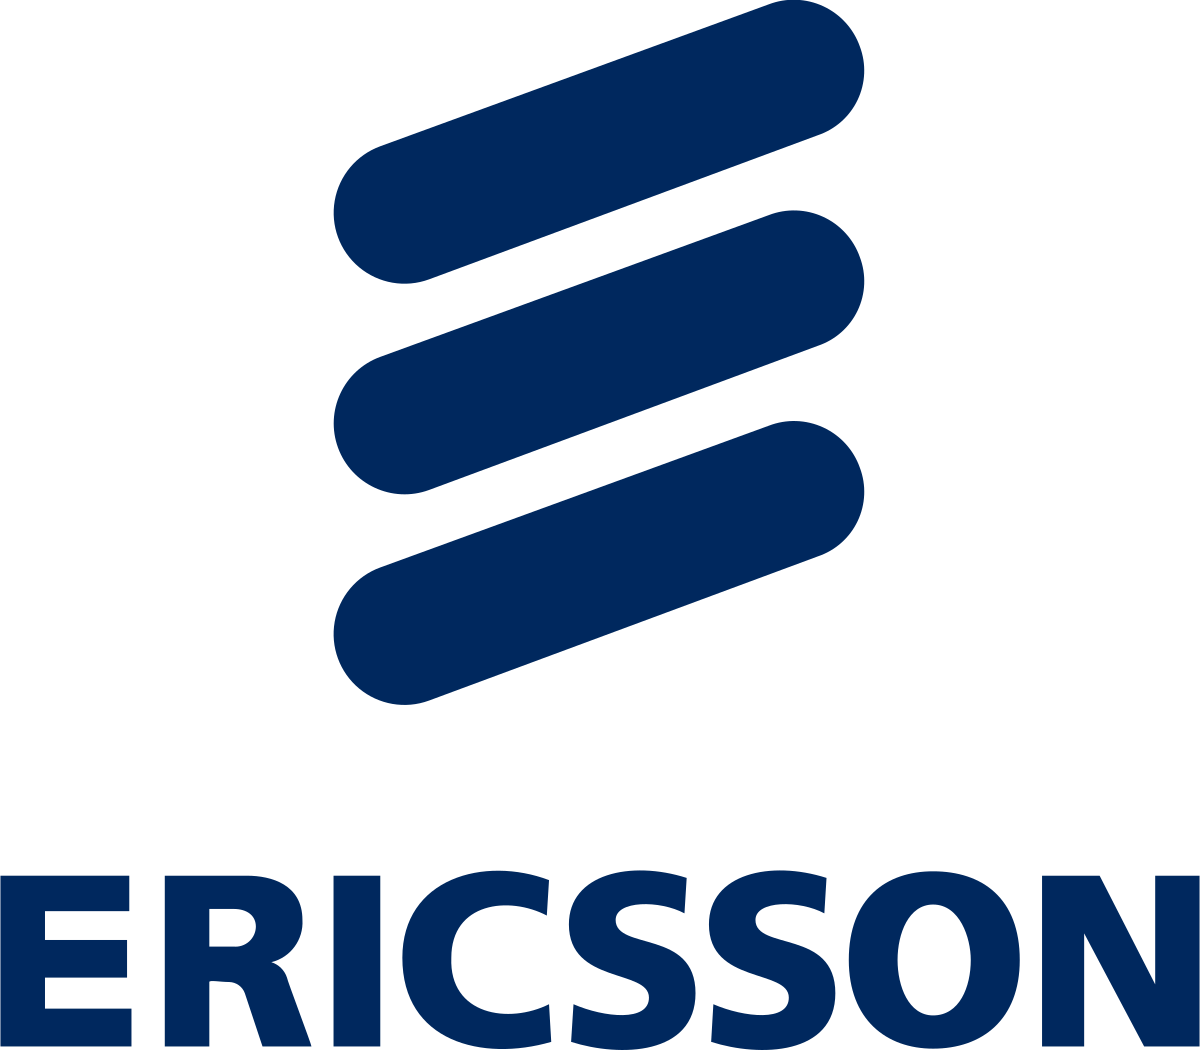 Jobs Openings in Ericsson